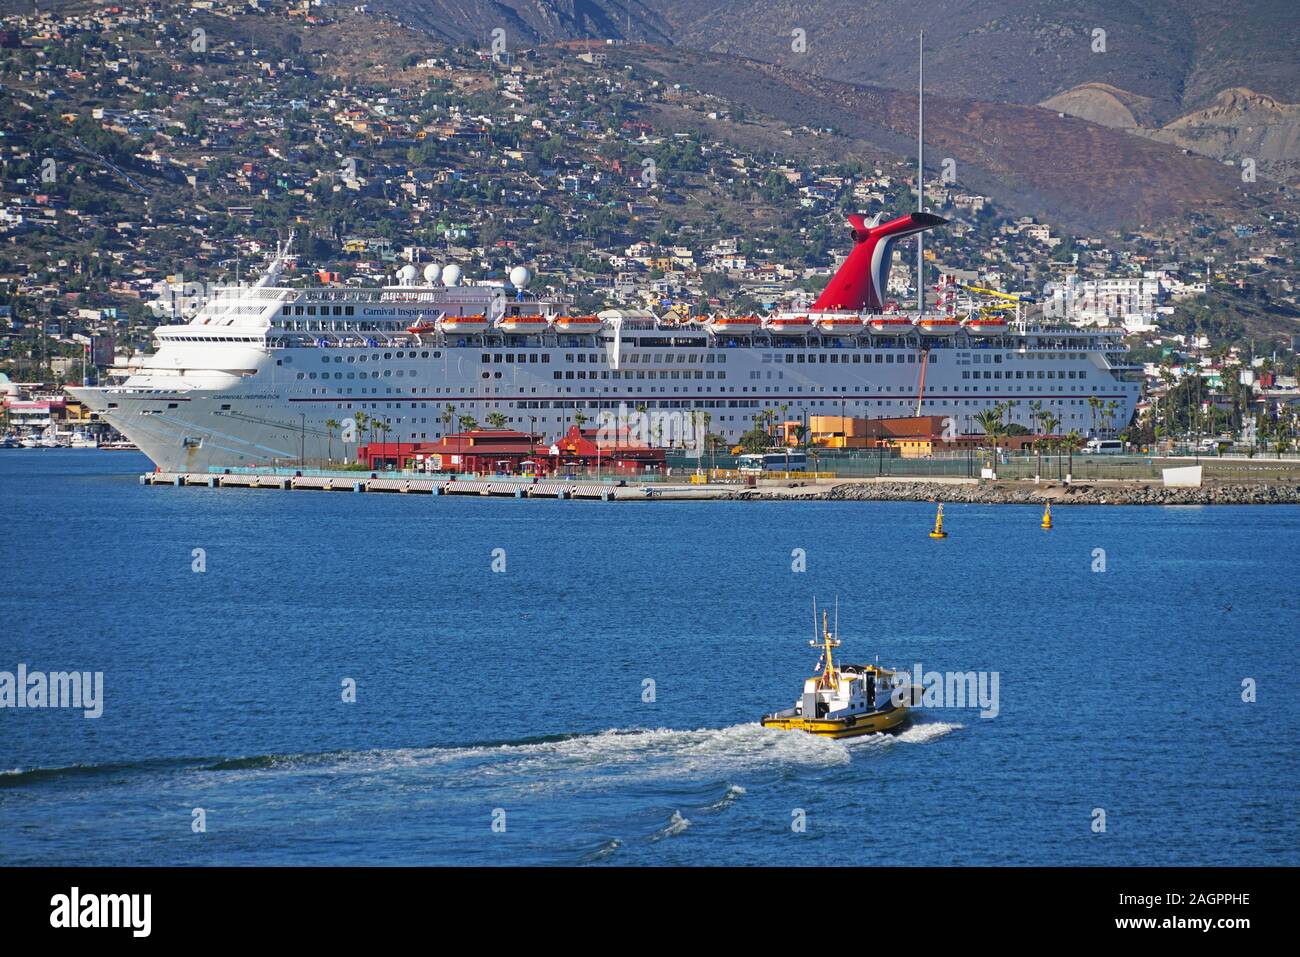 Carnival Inspiration crucero en el puerto de Ensenada, Baja California, México. Foto de stock